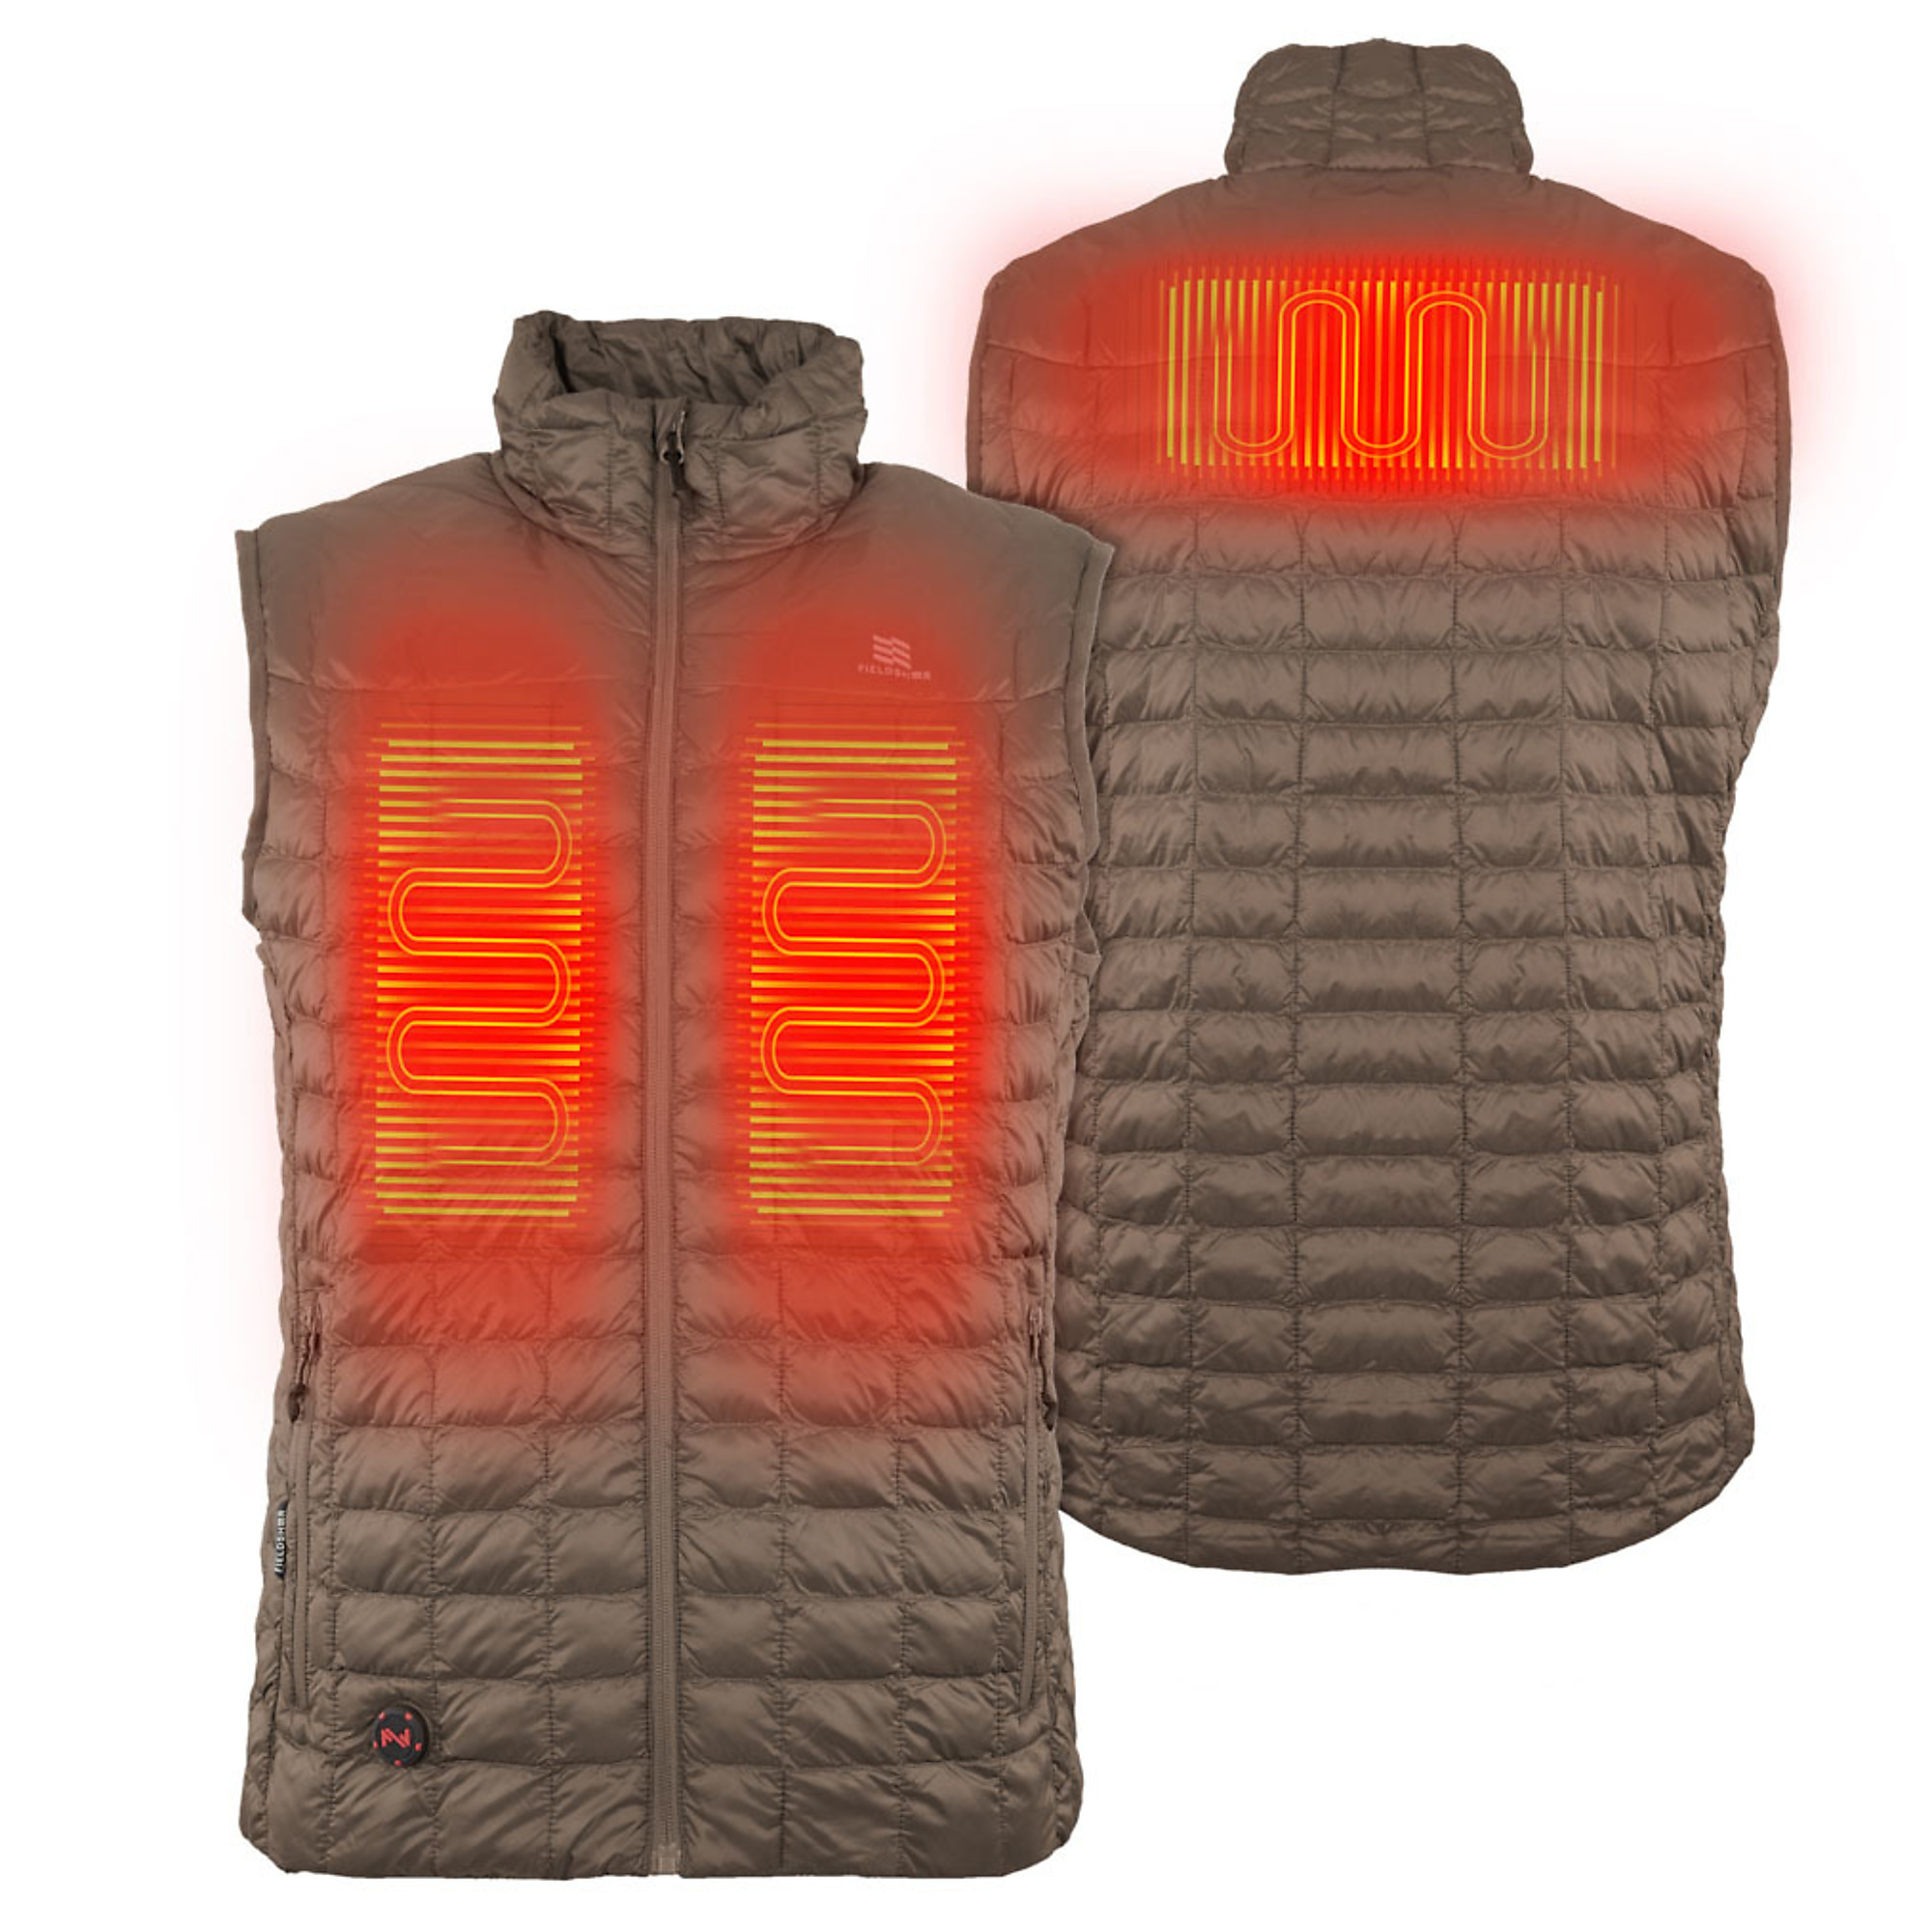 Fieldsheer, Men's Backcountry Heated Vest with 7.4v Battery, Size 3XL, Color Tan, Model MWMV04340721